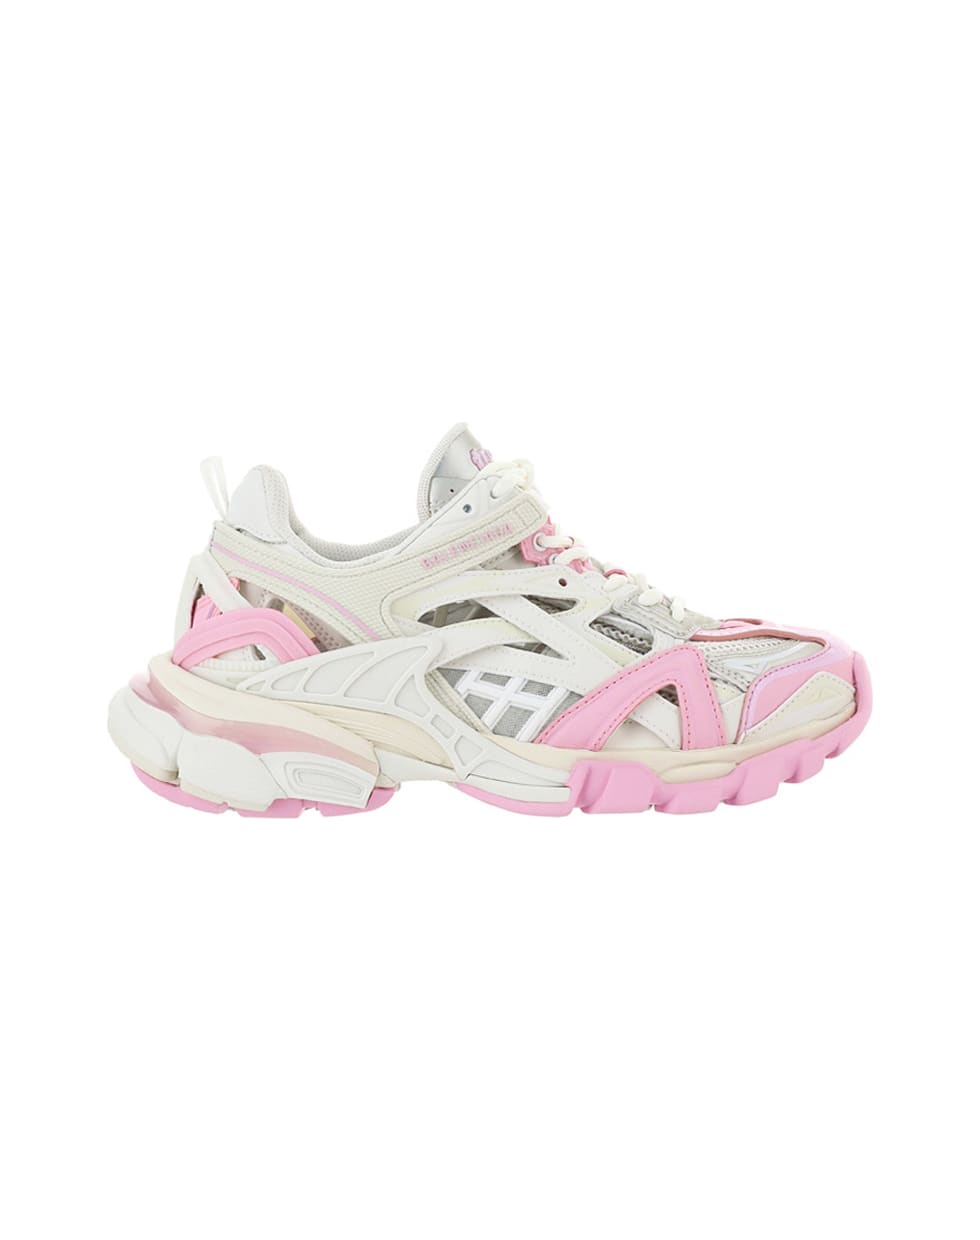 Balenciaga Track 2 Open Sneakers - Pink/beige/lg grey